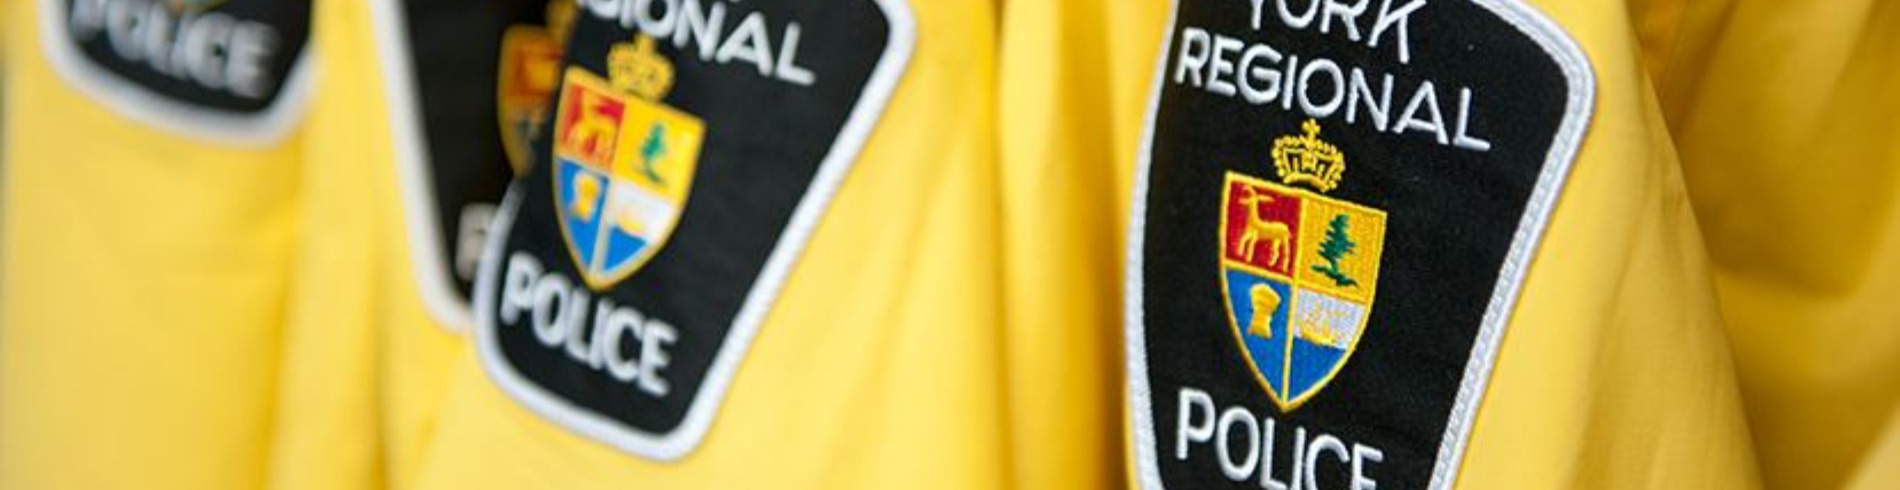 York Regional Police jacket badges